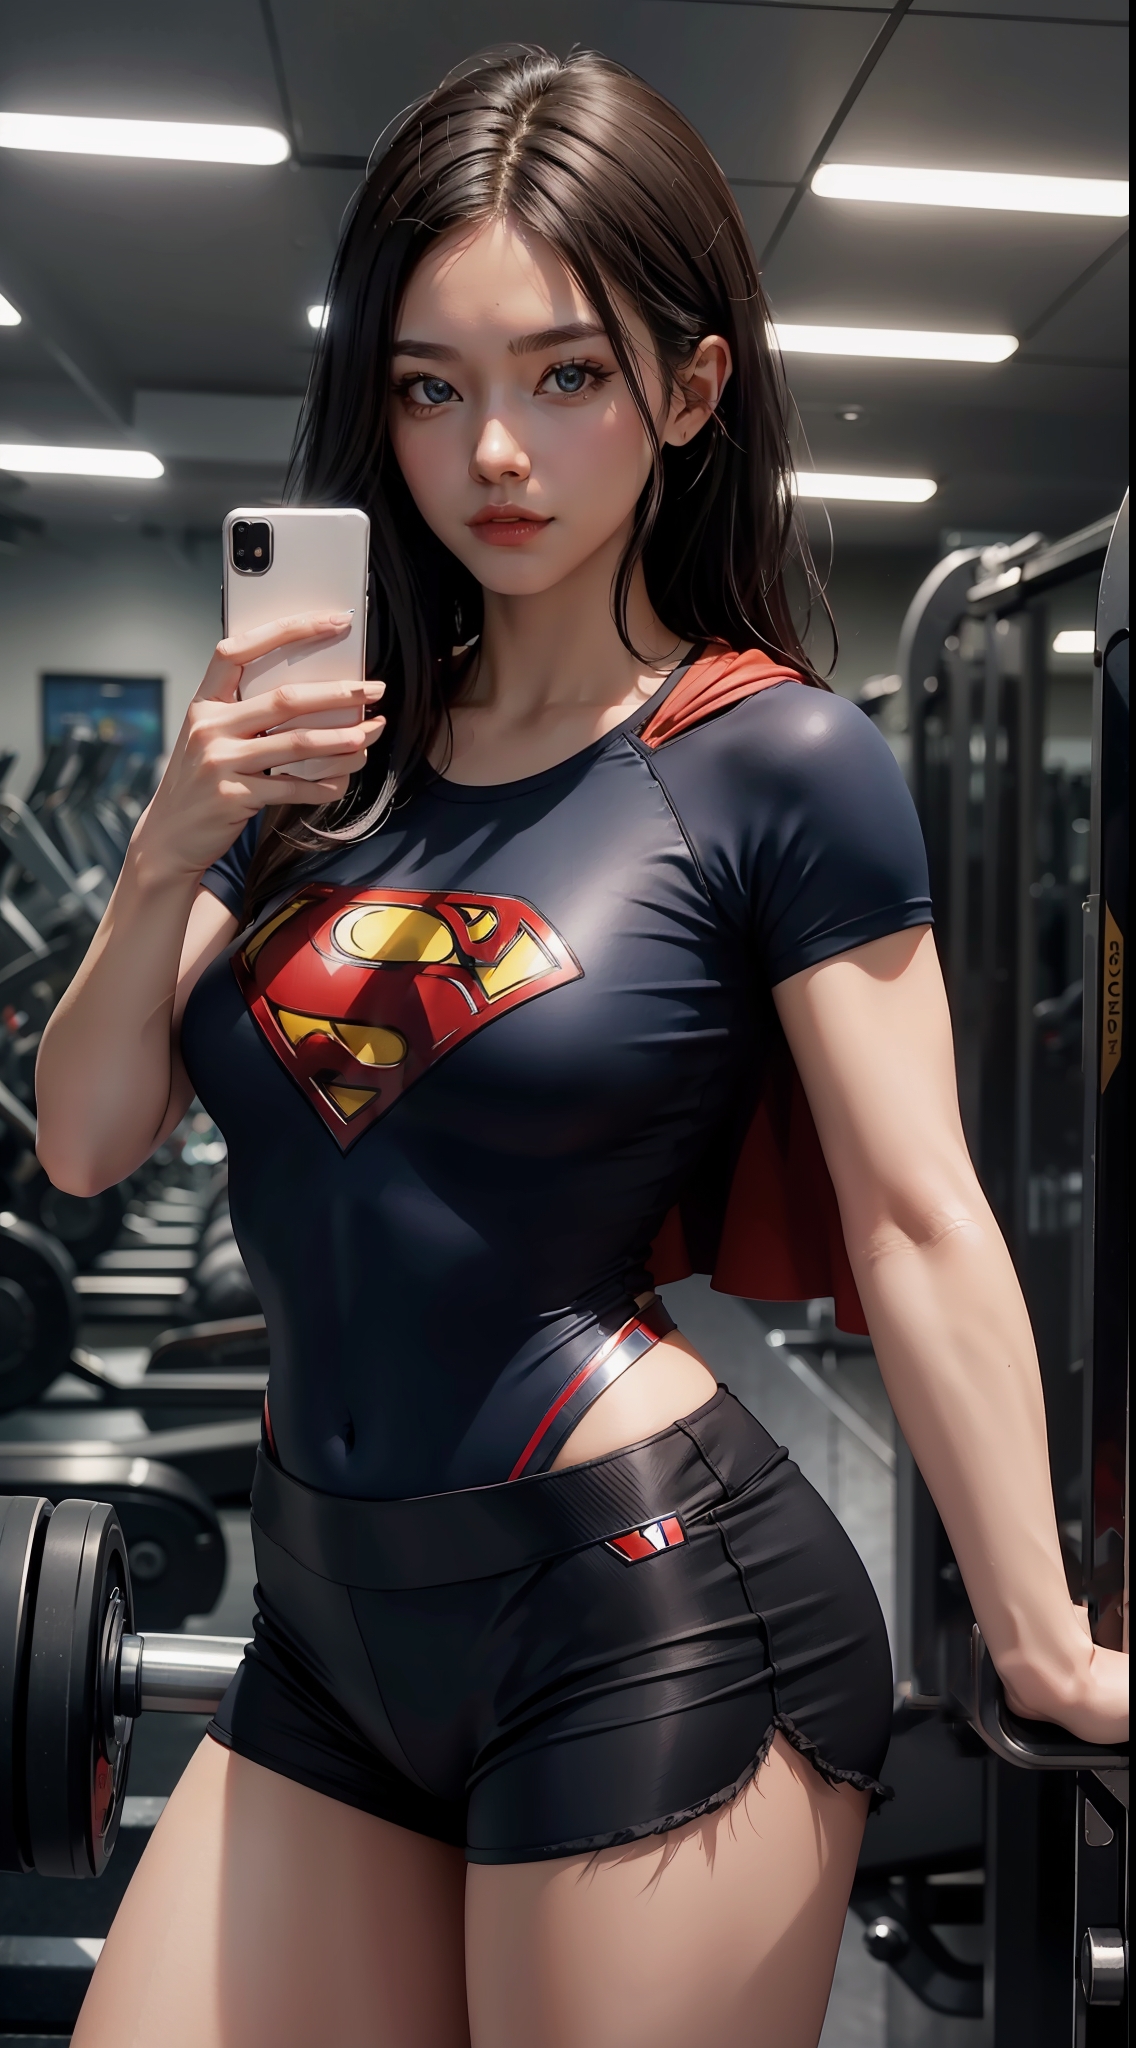 General 1136x2048 AI art gym cap Asian women portrait display phone selfies short shorts thighs gym equipment looking at viewer long hair